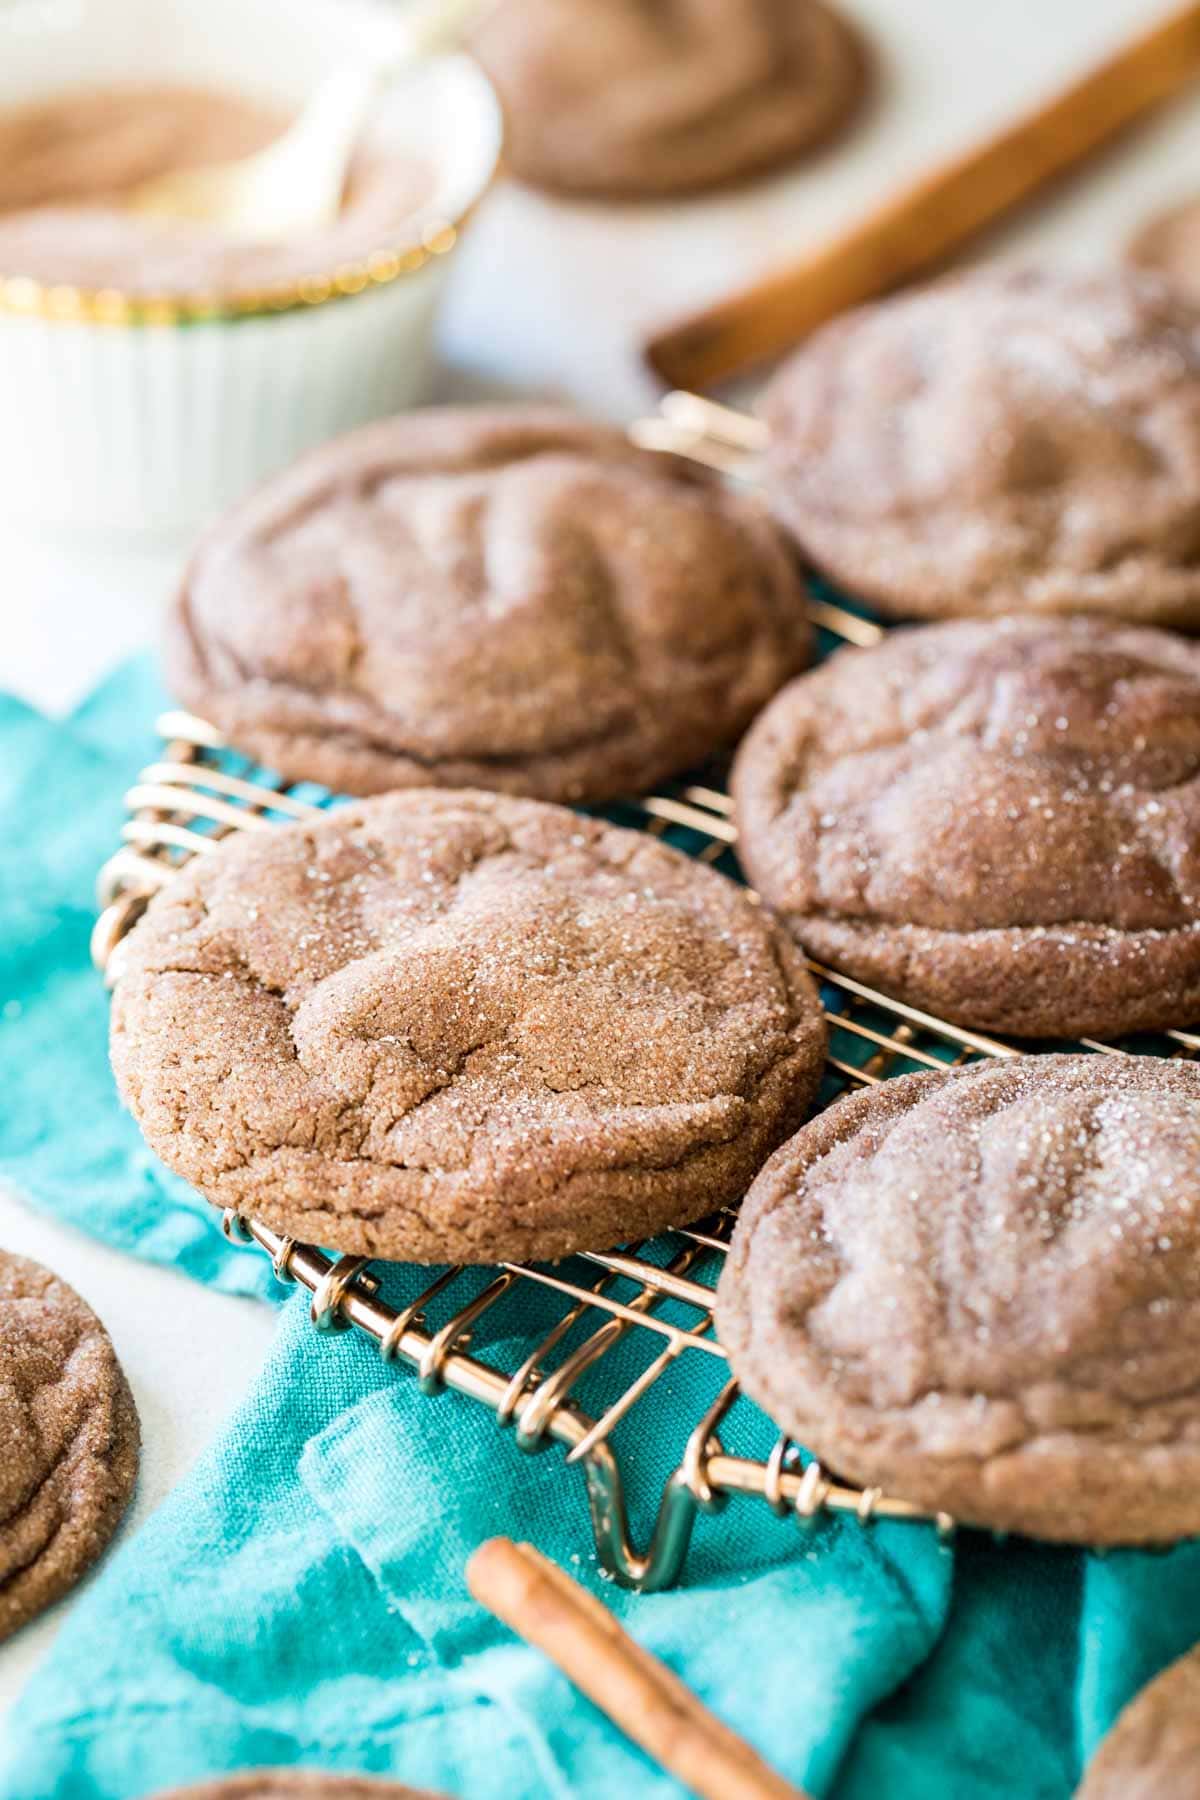 Crinkly, cinnamon sugar coated chocolate cookies on a cooling rack.